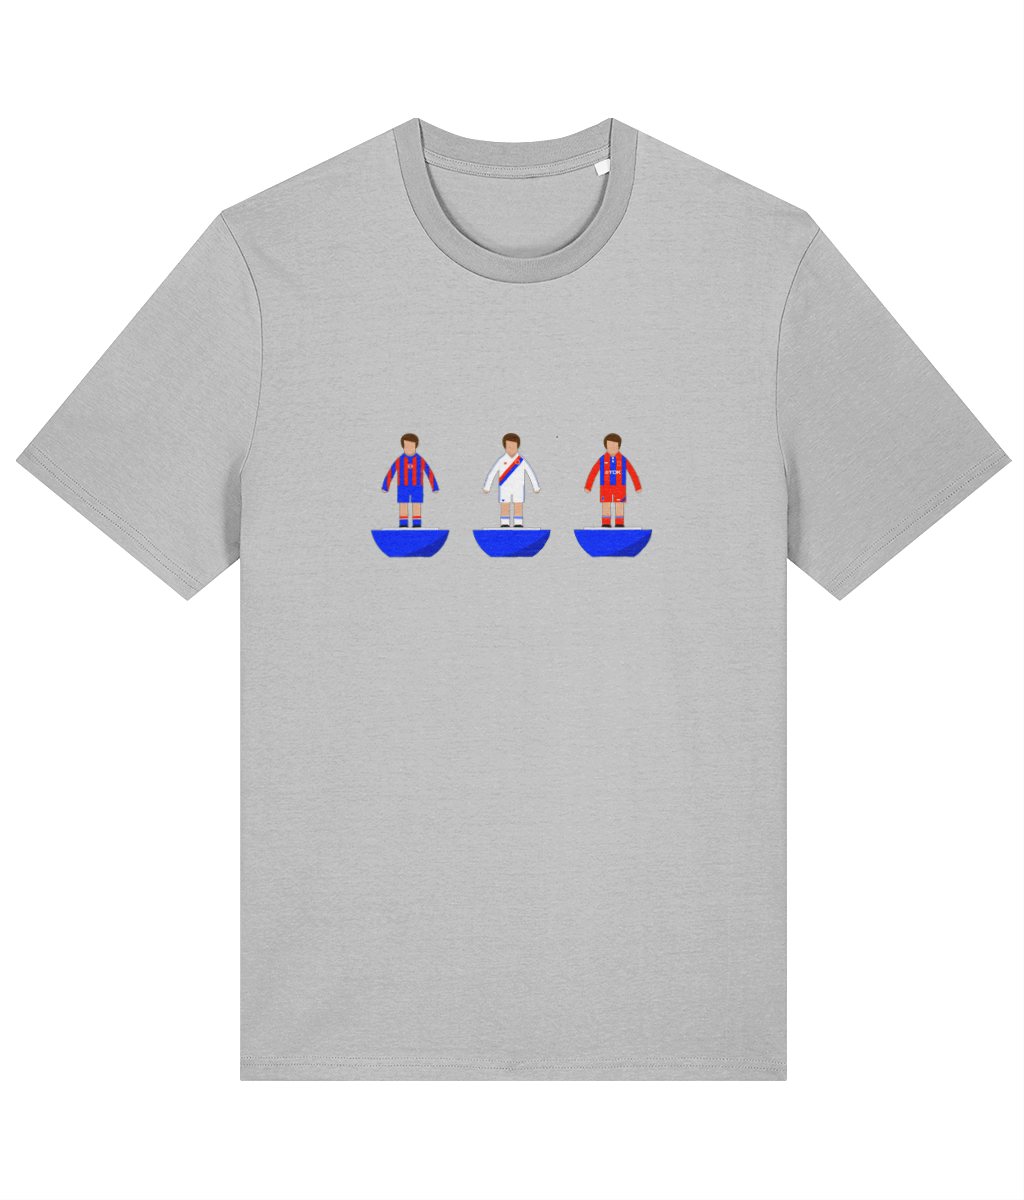 Football Kits 'Crystal Palace combined' Unisex T-Shirt